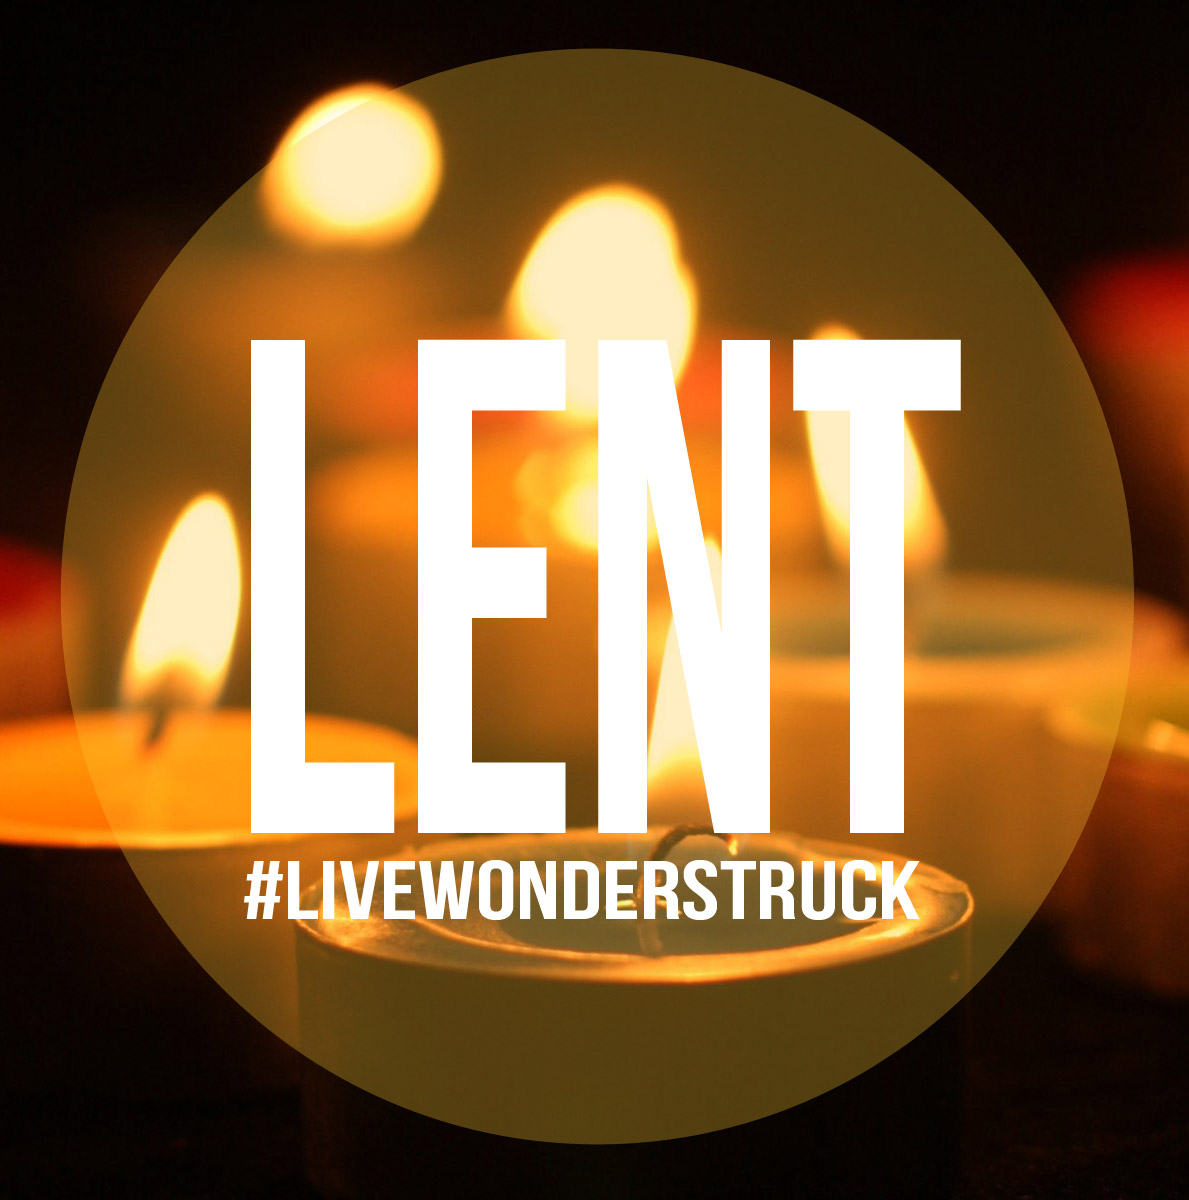 The Wonder of Lent